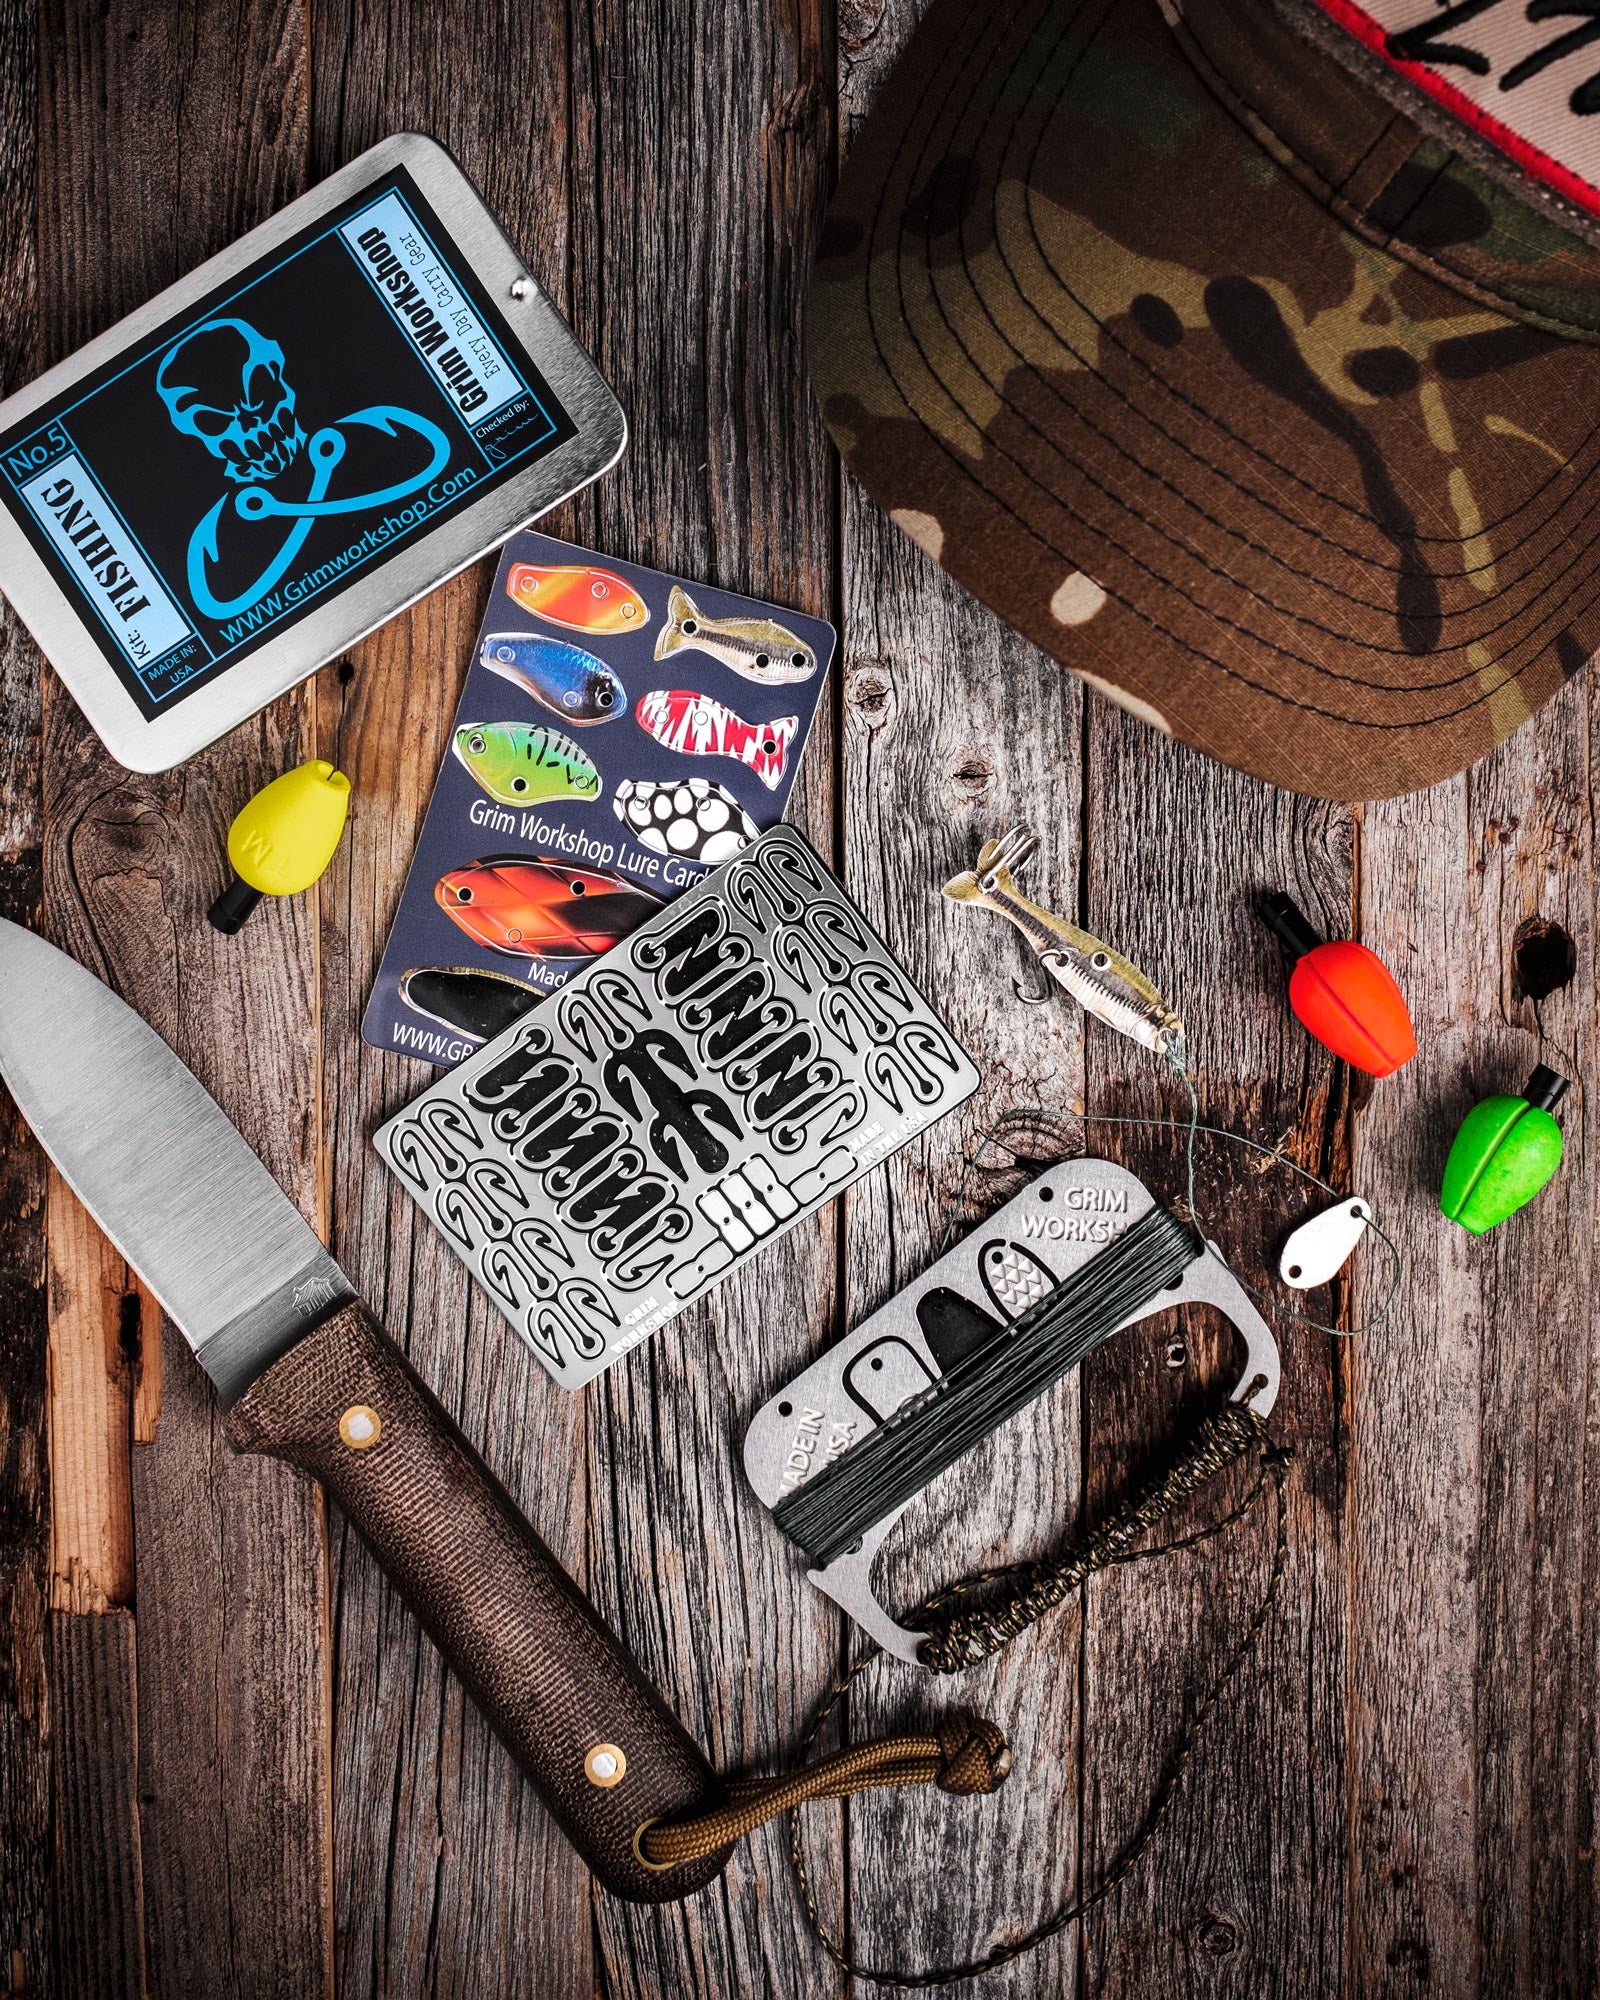 Grim Workshop Fishing Card Credit Card Sized Survival Fishing Kit 